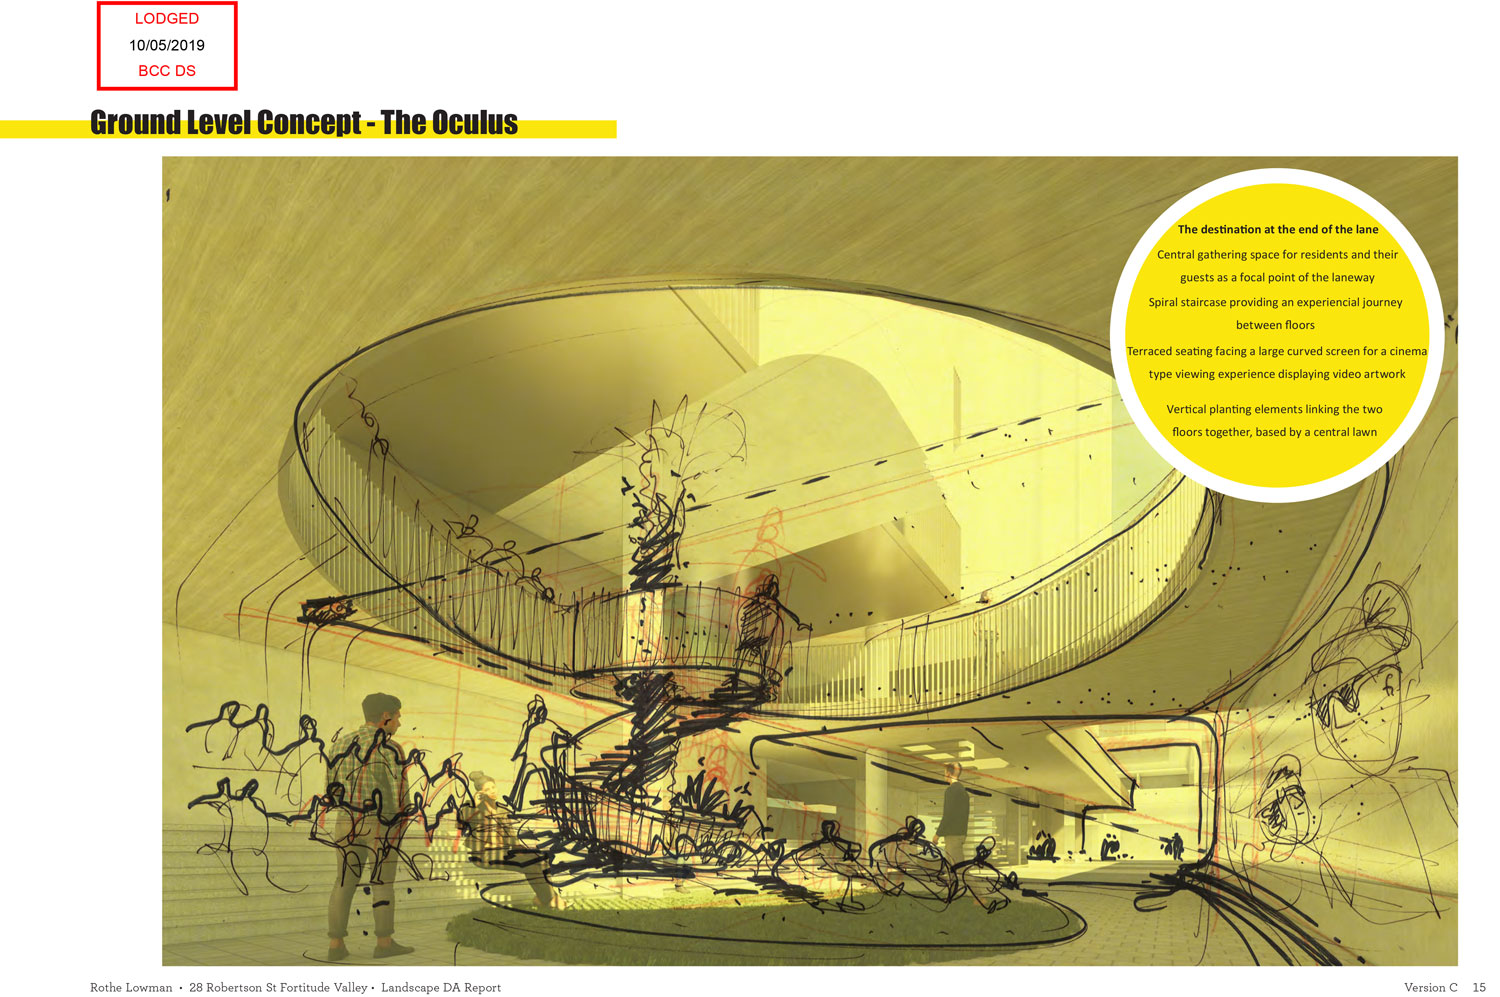 Ground level concept diagram of 'The Oculus'